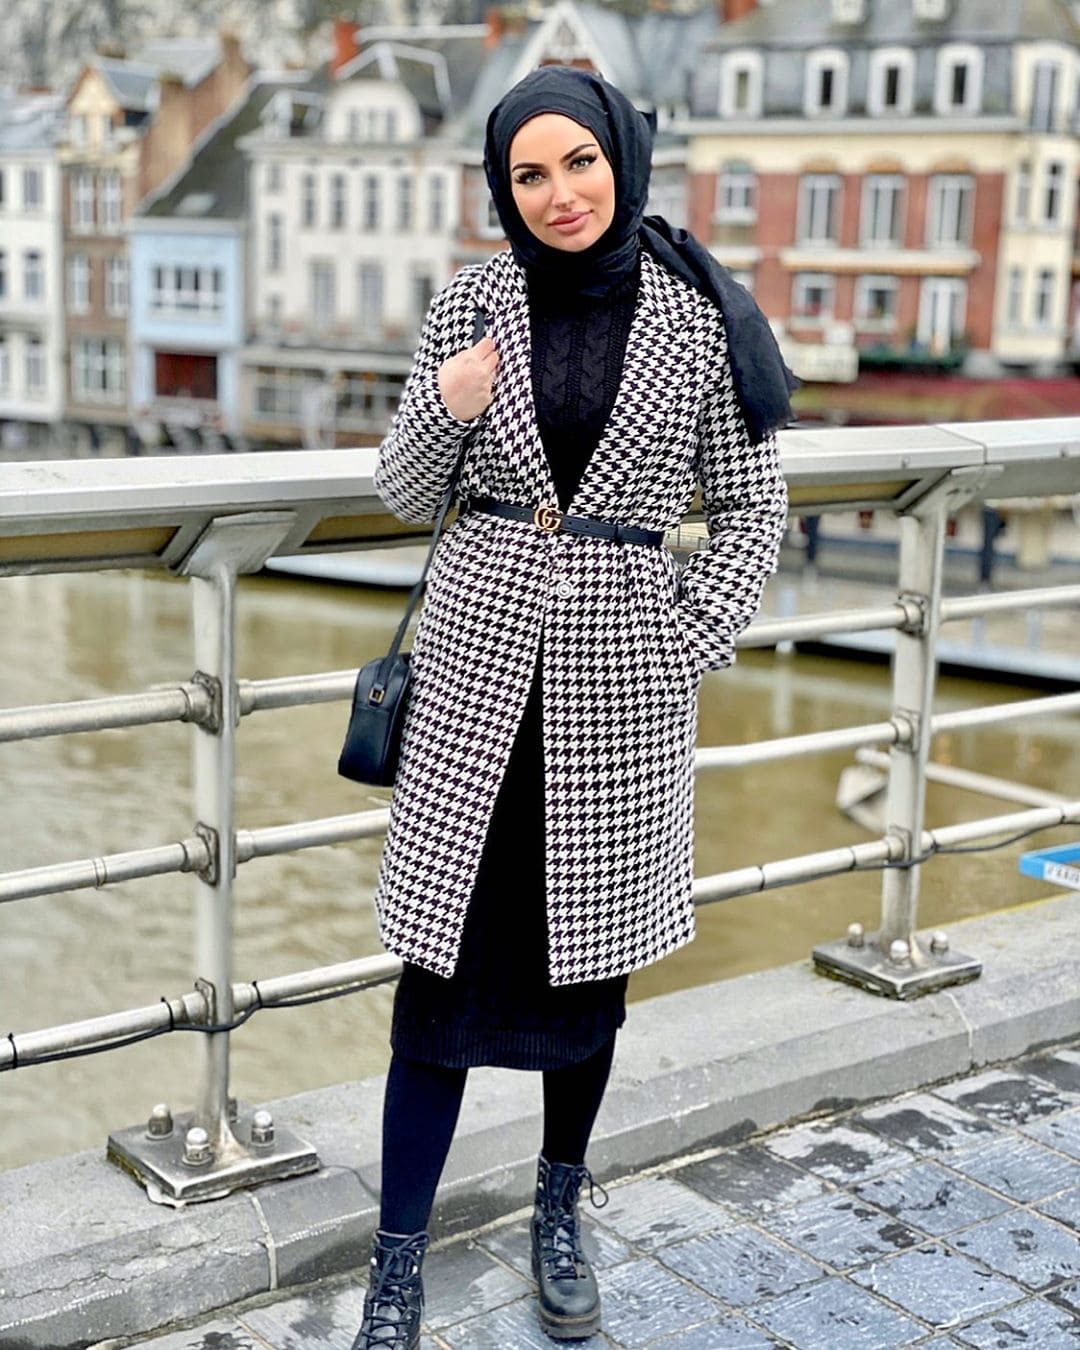 Blogger Of The Week: Fatima aka @fa.t1ma - Hijab Fashion Inspiration